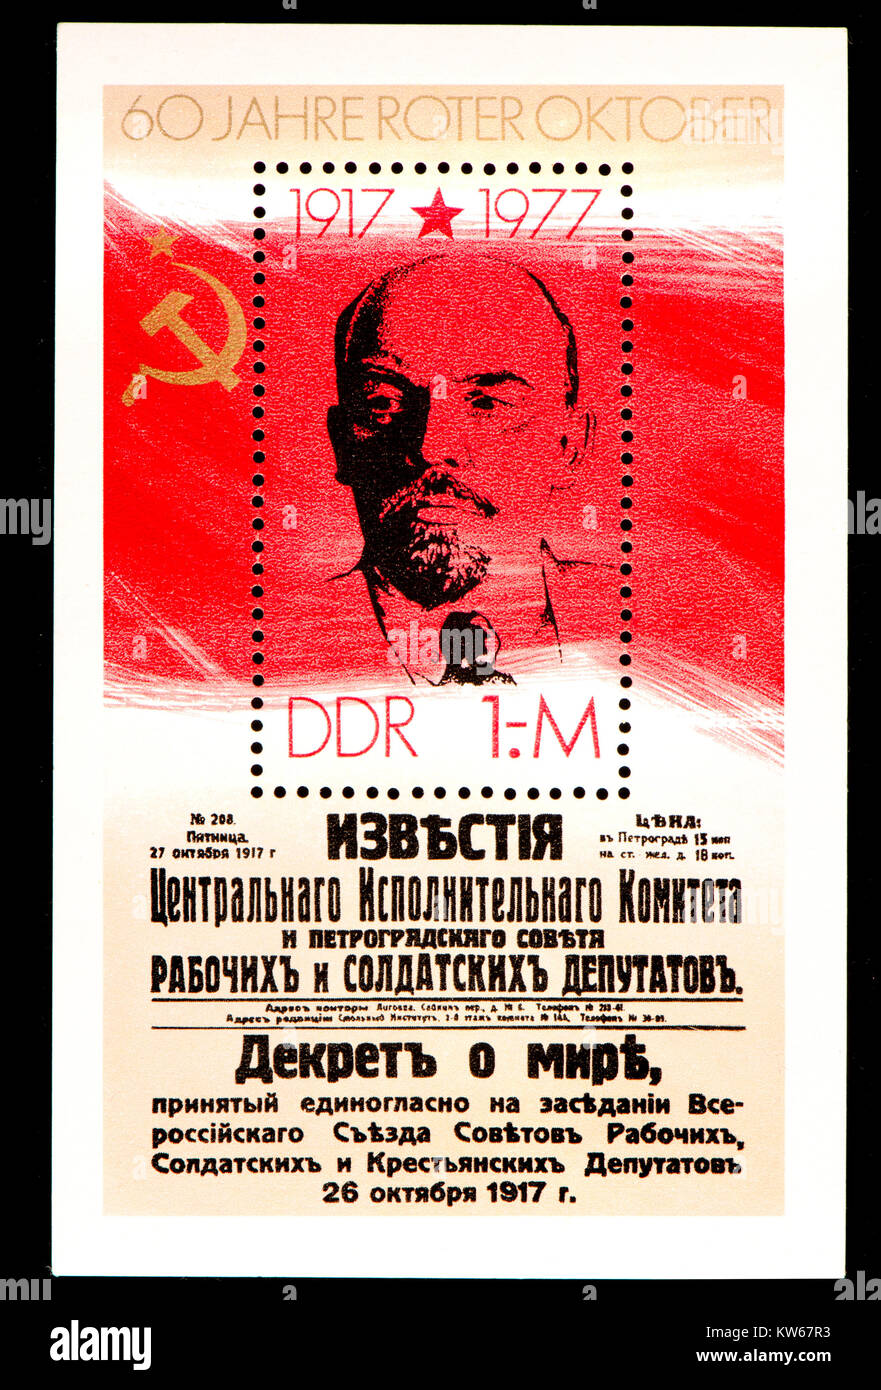 Ddr (DDR) Briefmarke (1977): 60. Jahrestag der Oktoberrevolution/Roter Oktober - Lenin Stockfoto